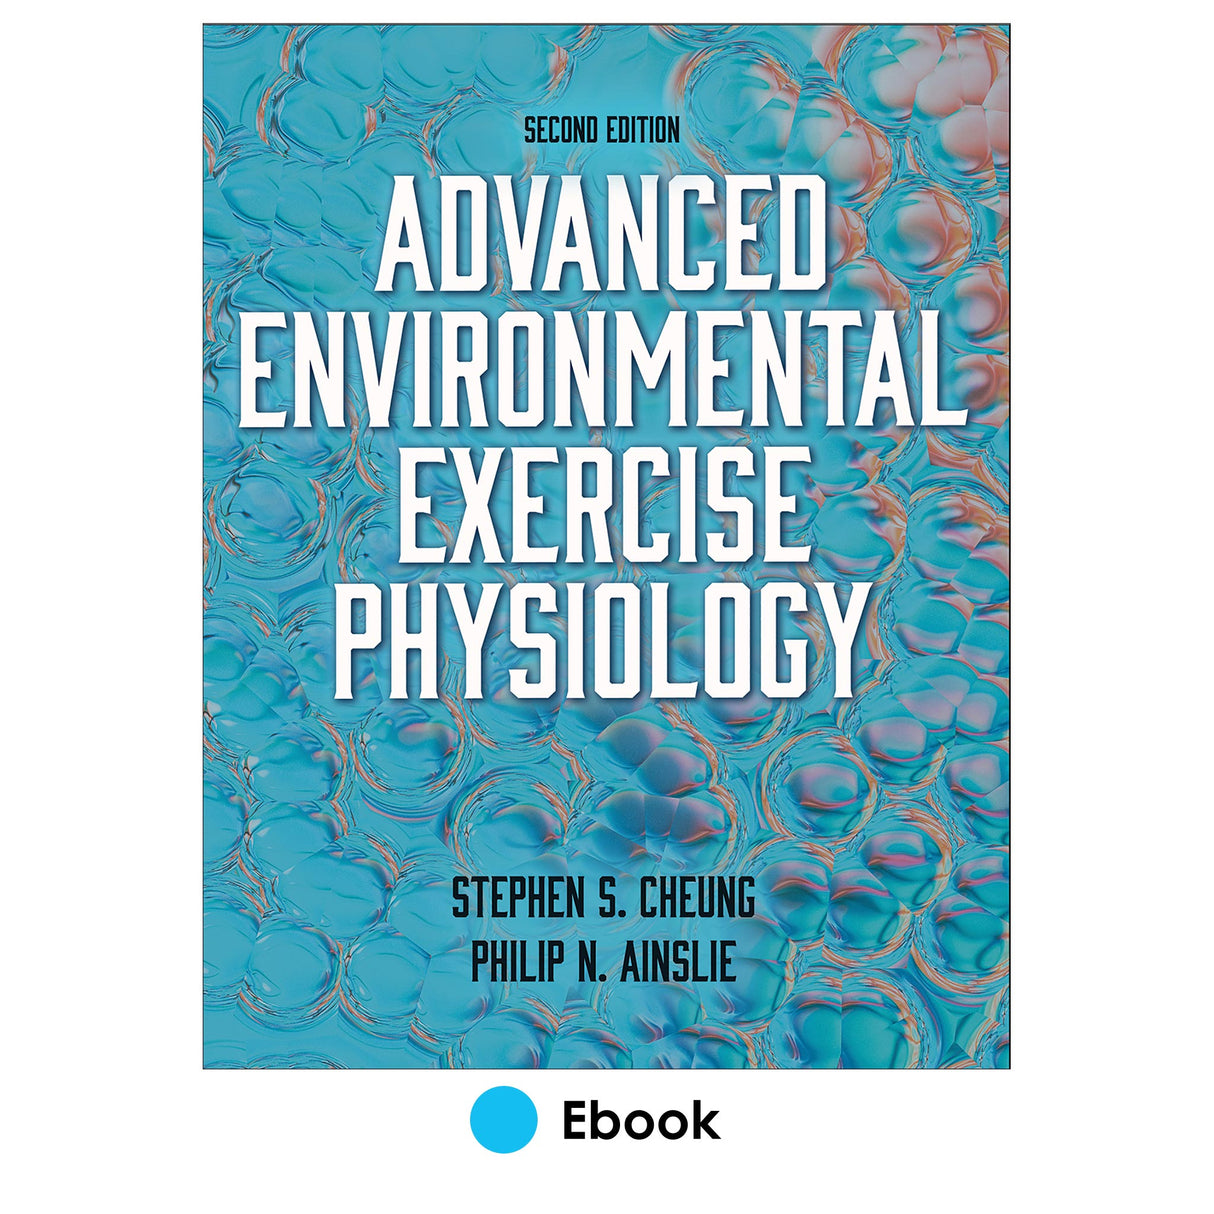 Advanced Environmental Exercise Physiology 2nd Edition epub